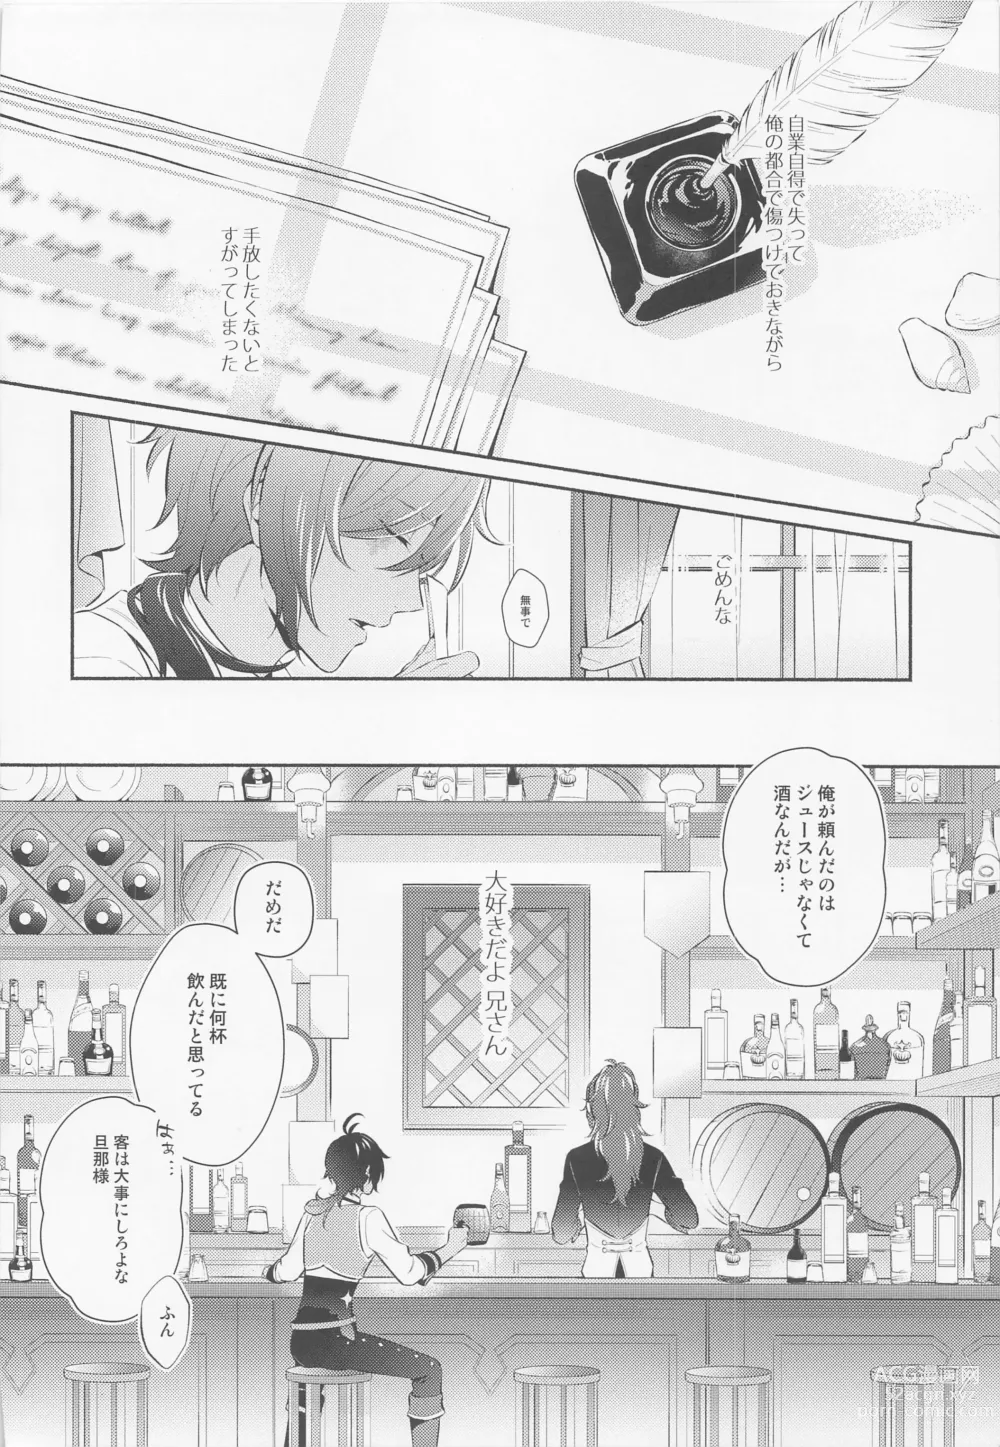 Page 32 of doujinshi Kimi to Yoake o